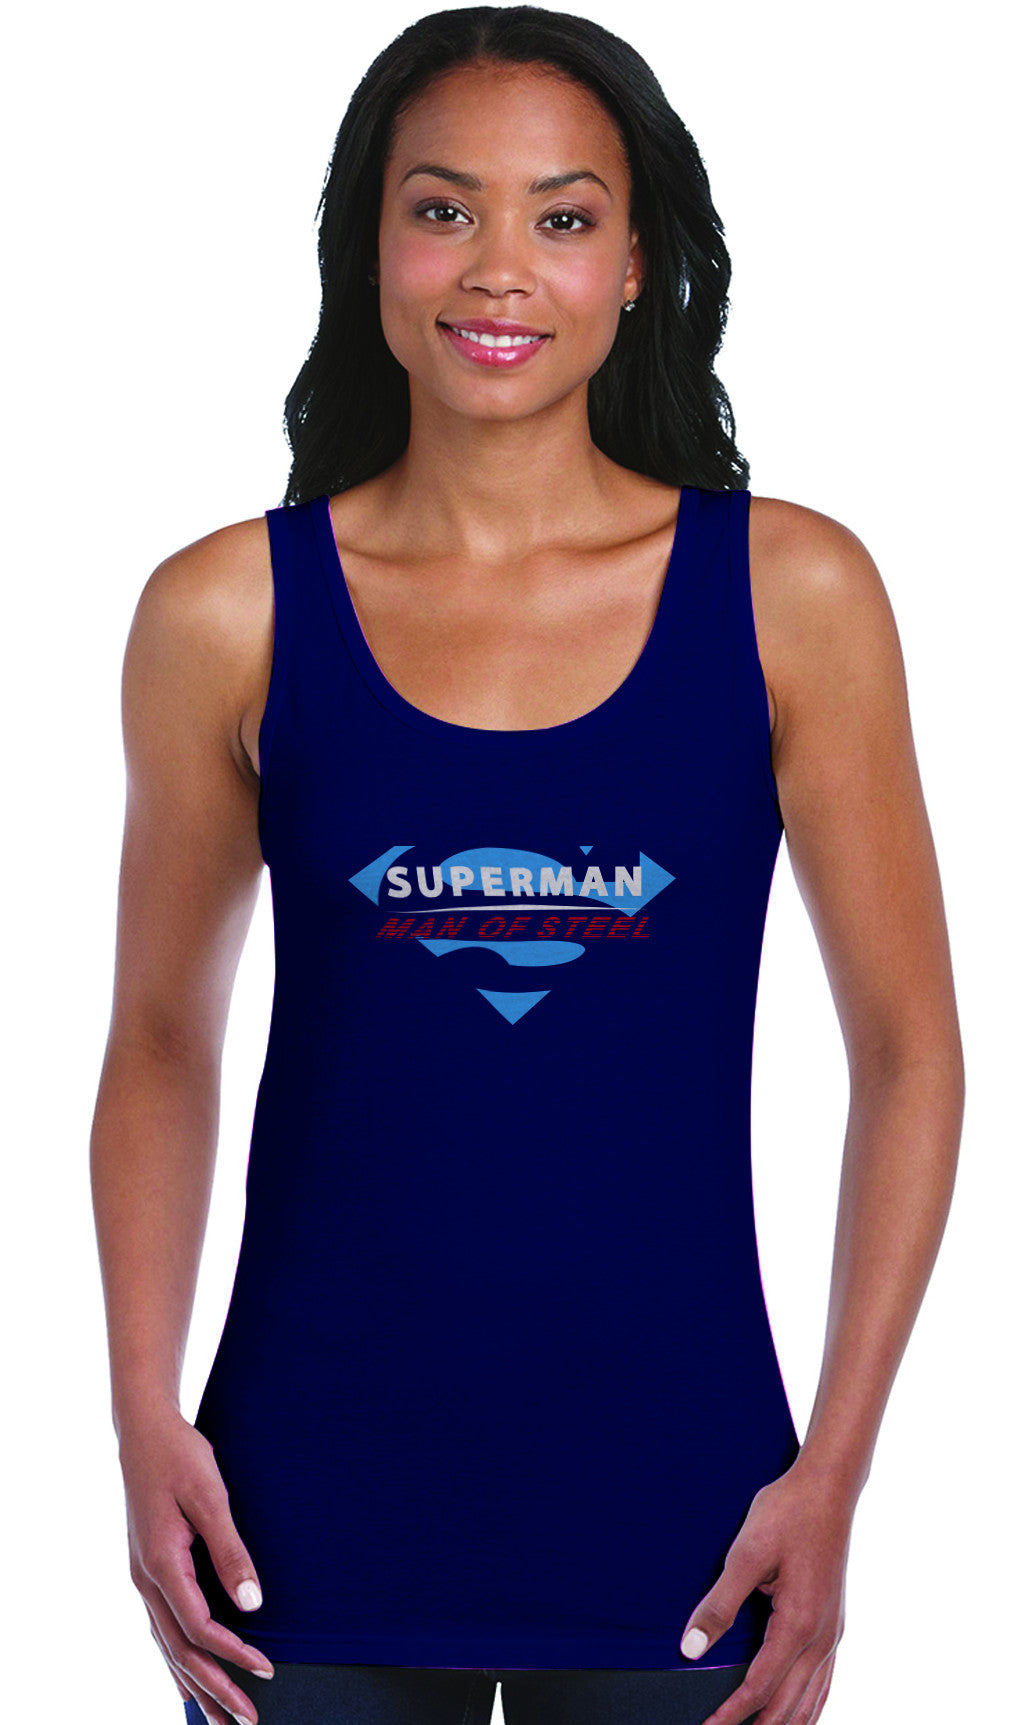 Superman Man Of Steel Logo on Blue Tank Top for Women - TshirtNow.net - 1